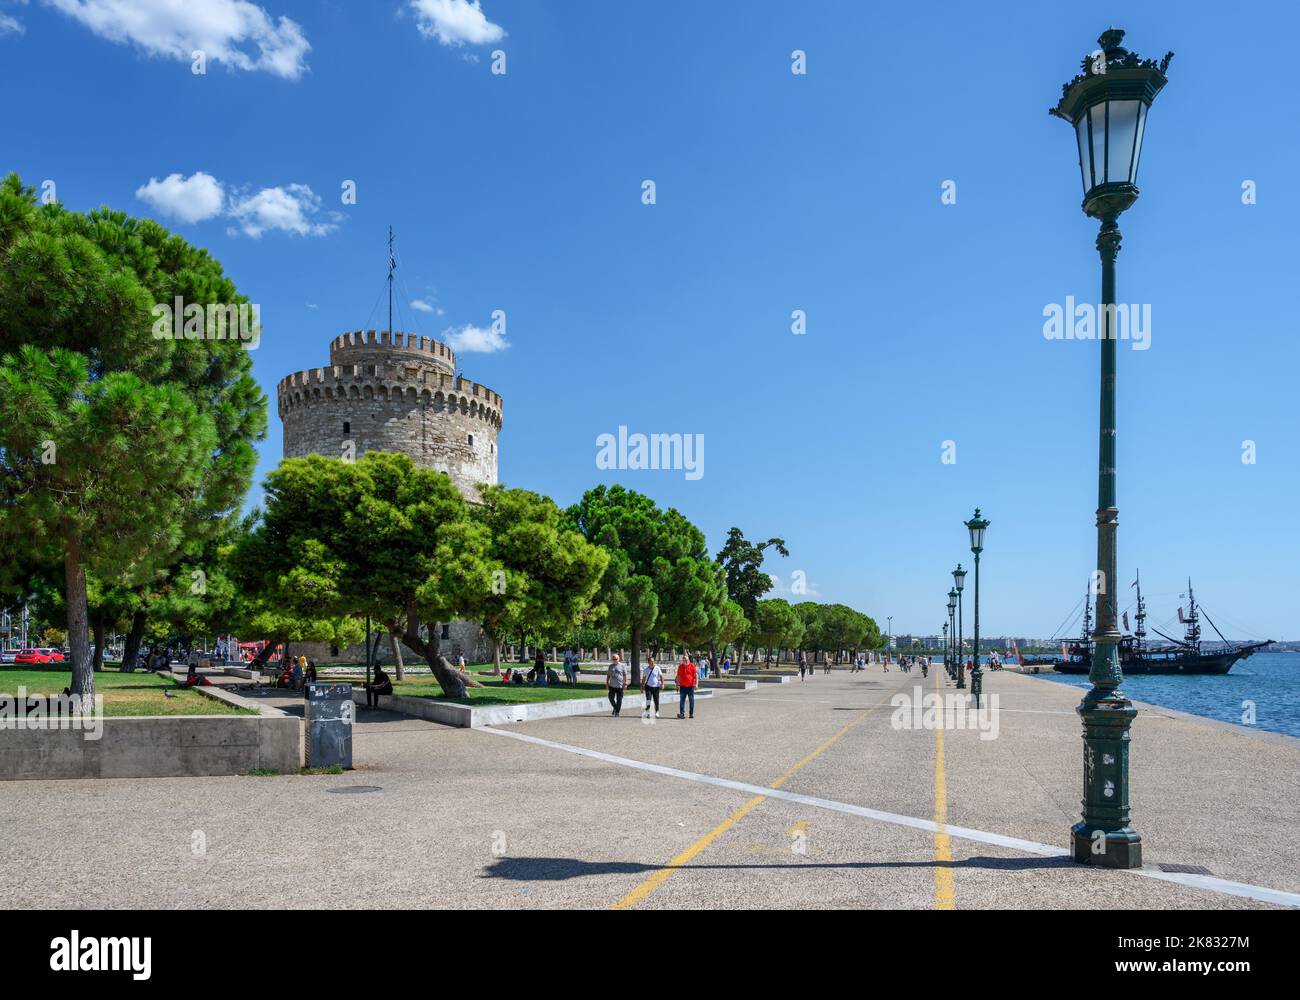 Salónica. Paseo marítimo y la Torre Blanca (Lefkos Pyrgos), Avenida Nikis, Tesalónica, Macedonia, Grecia Foto de stock